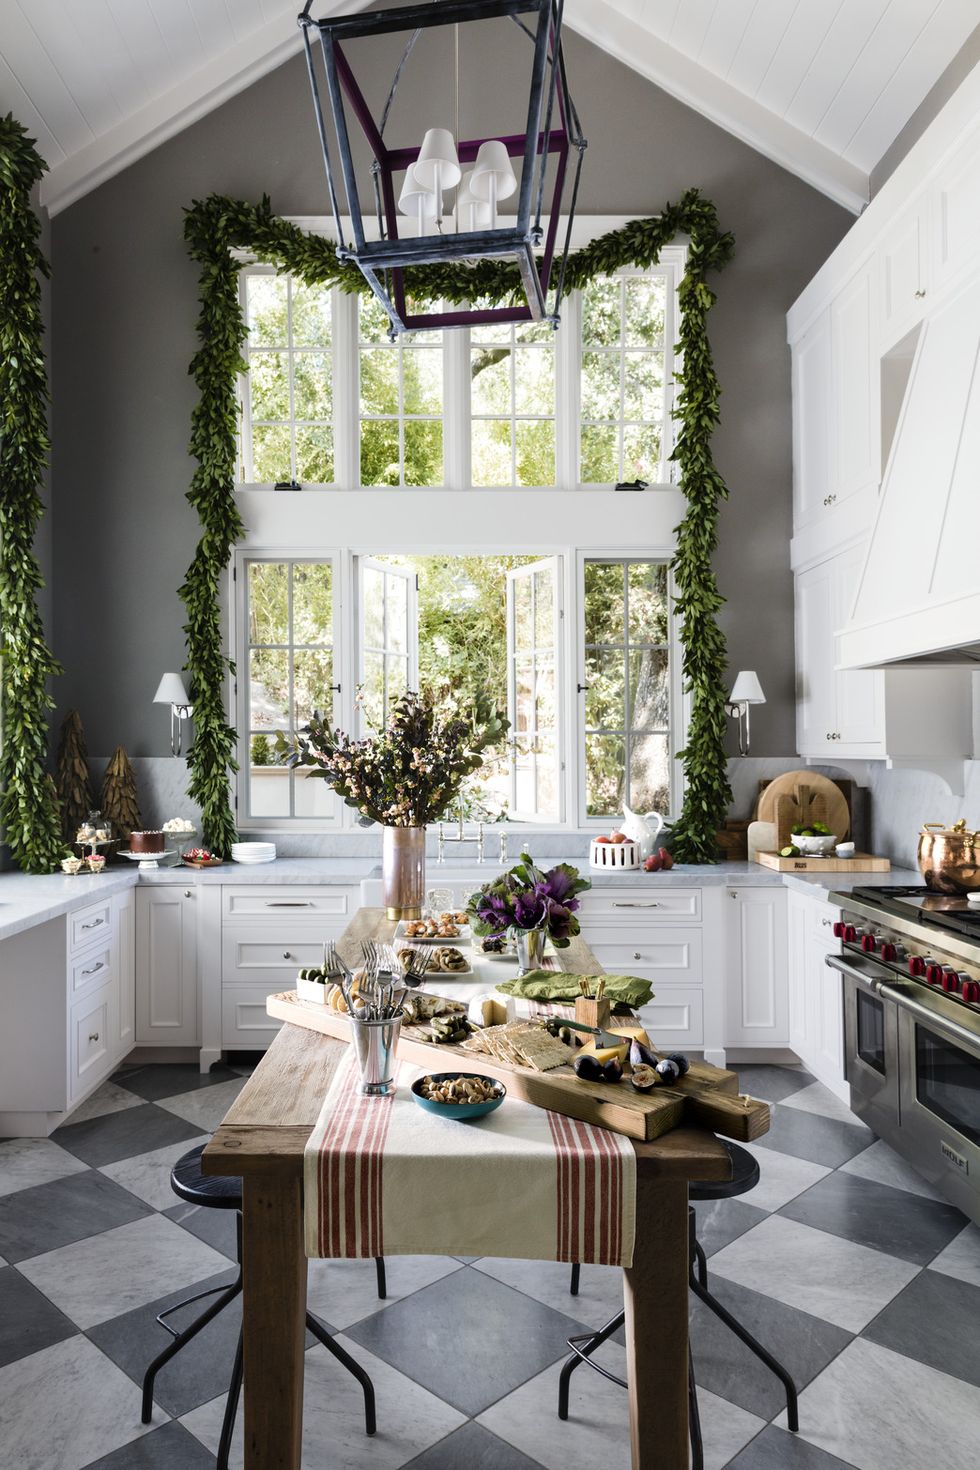 9 Quick Christmas Kitchen Decor Ideas - Bless'er House